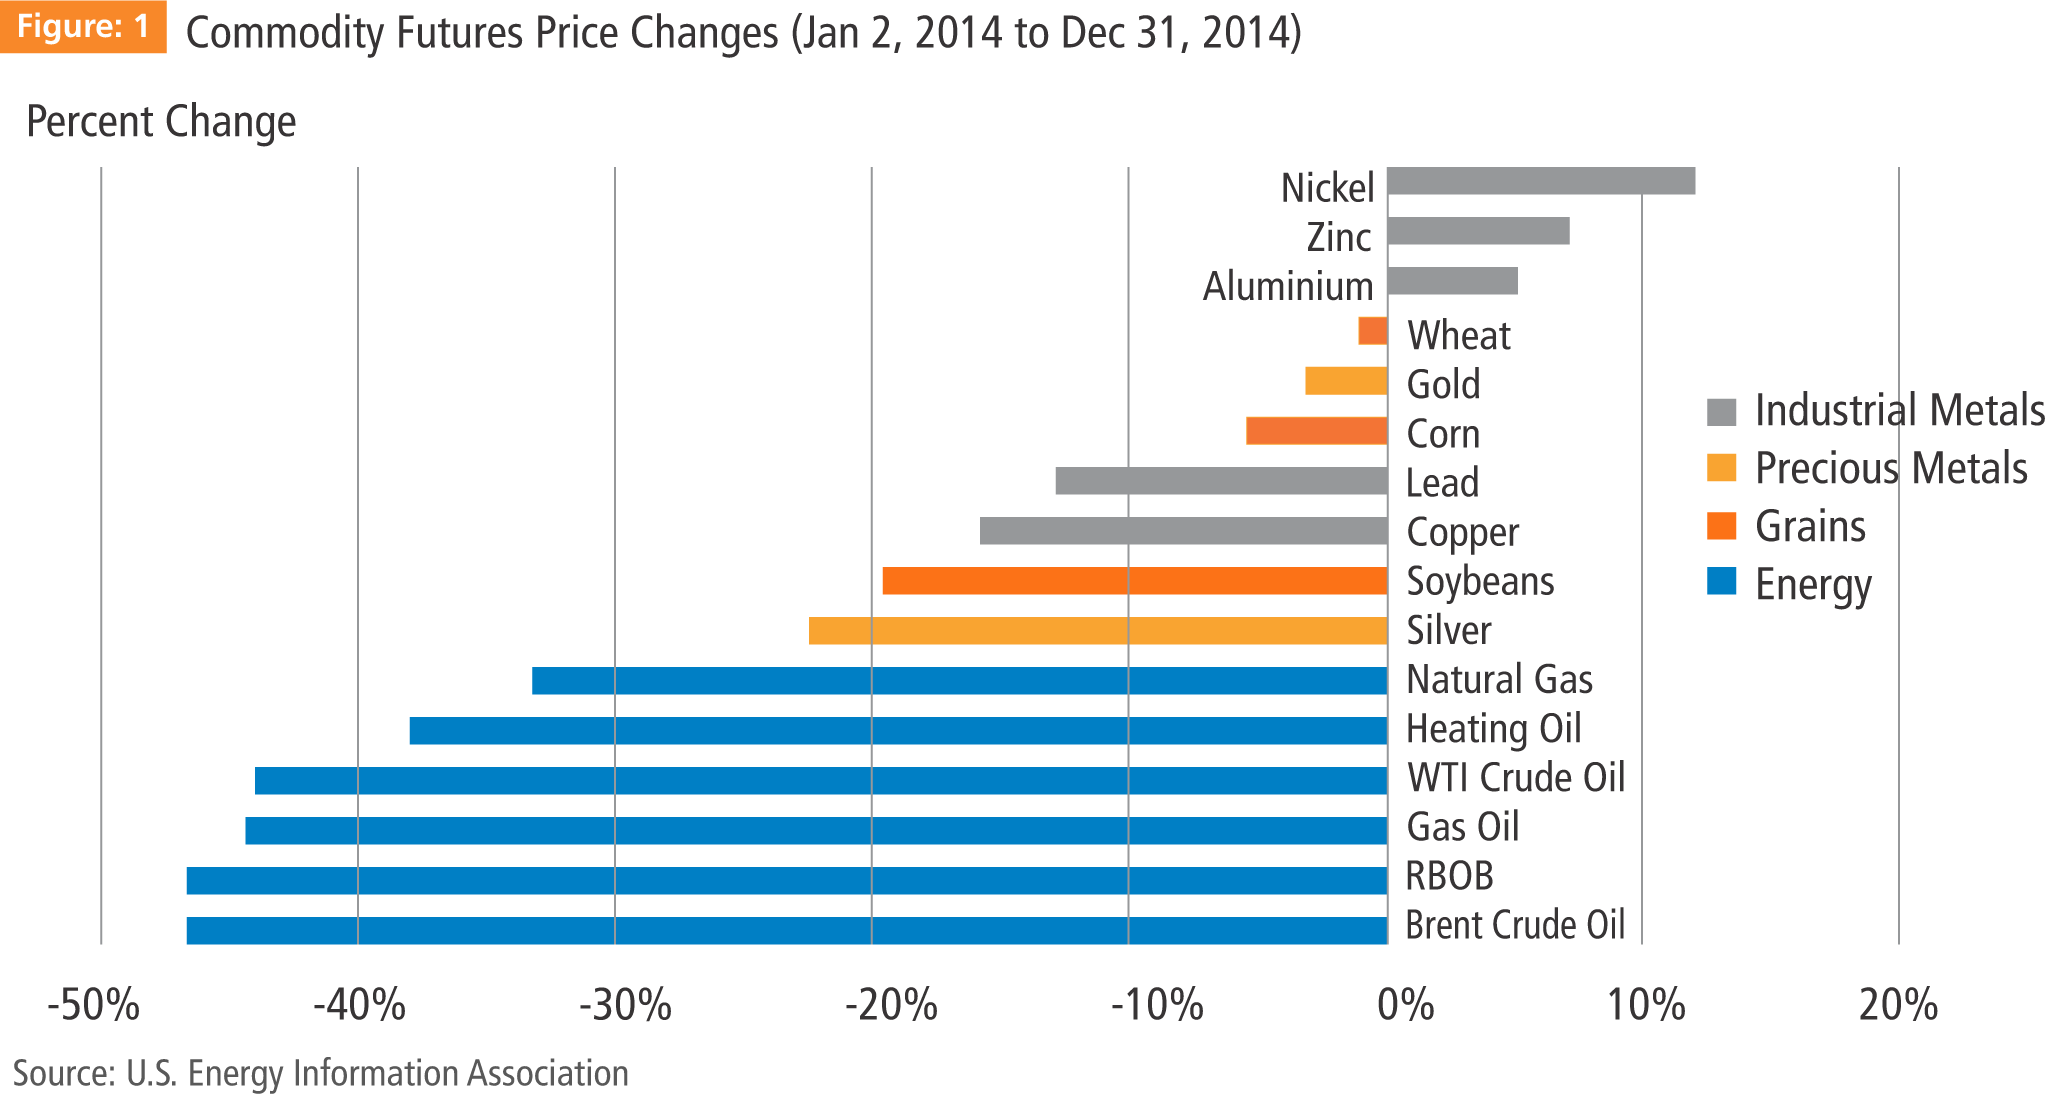 Global Commodity Price